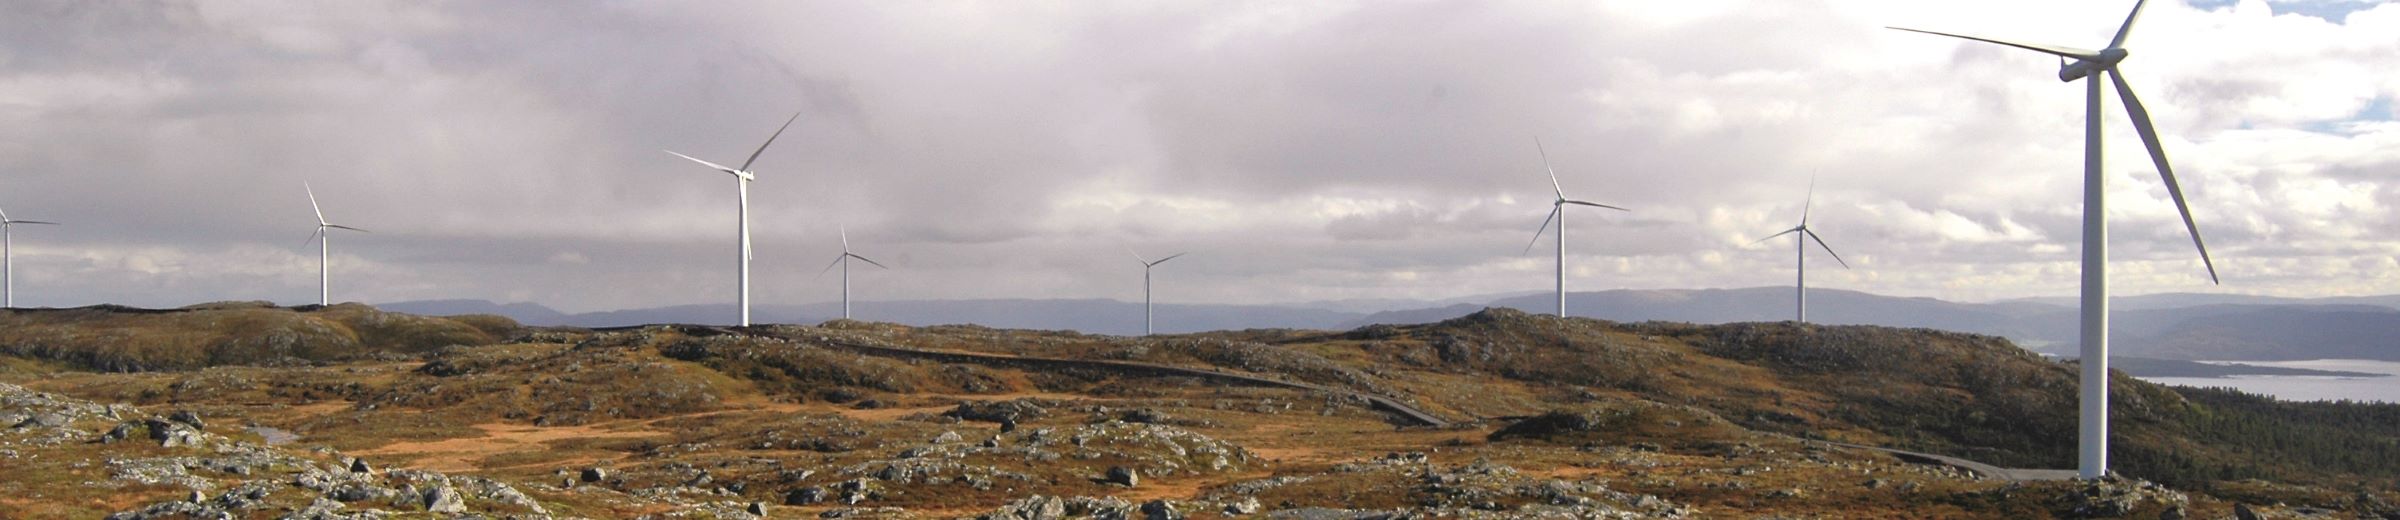 Wind turbines in a cloudy landscape